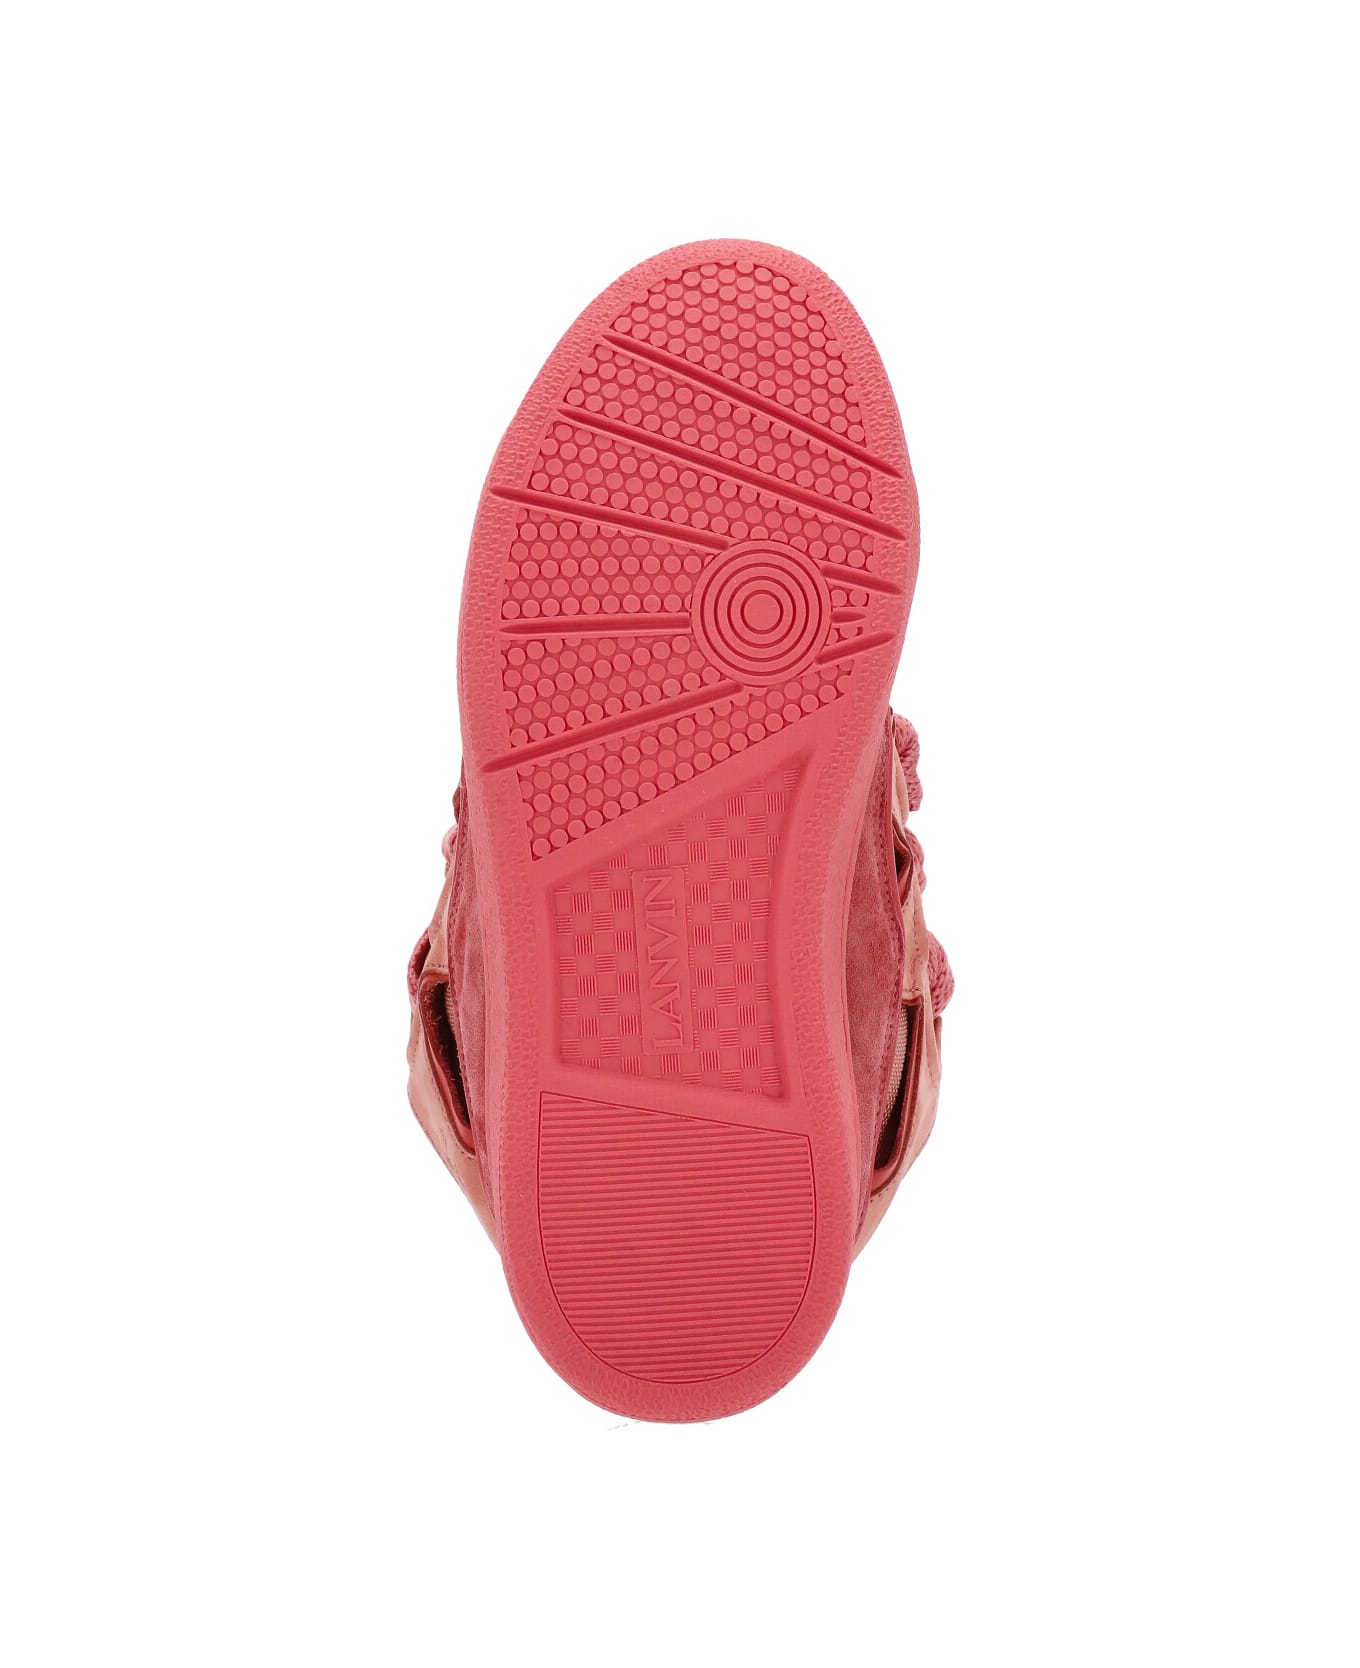 Lanvin Curb Sneakers - Fuchsia